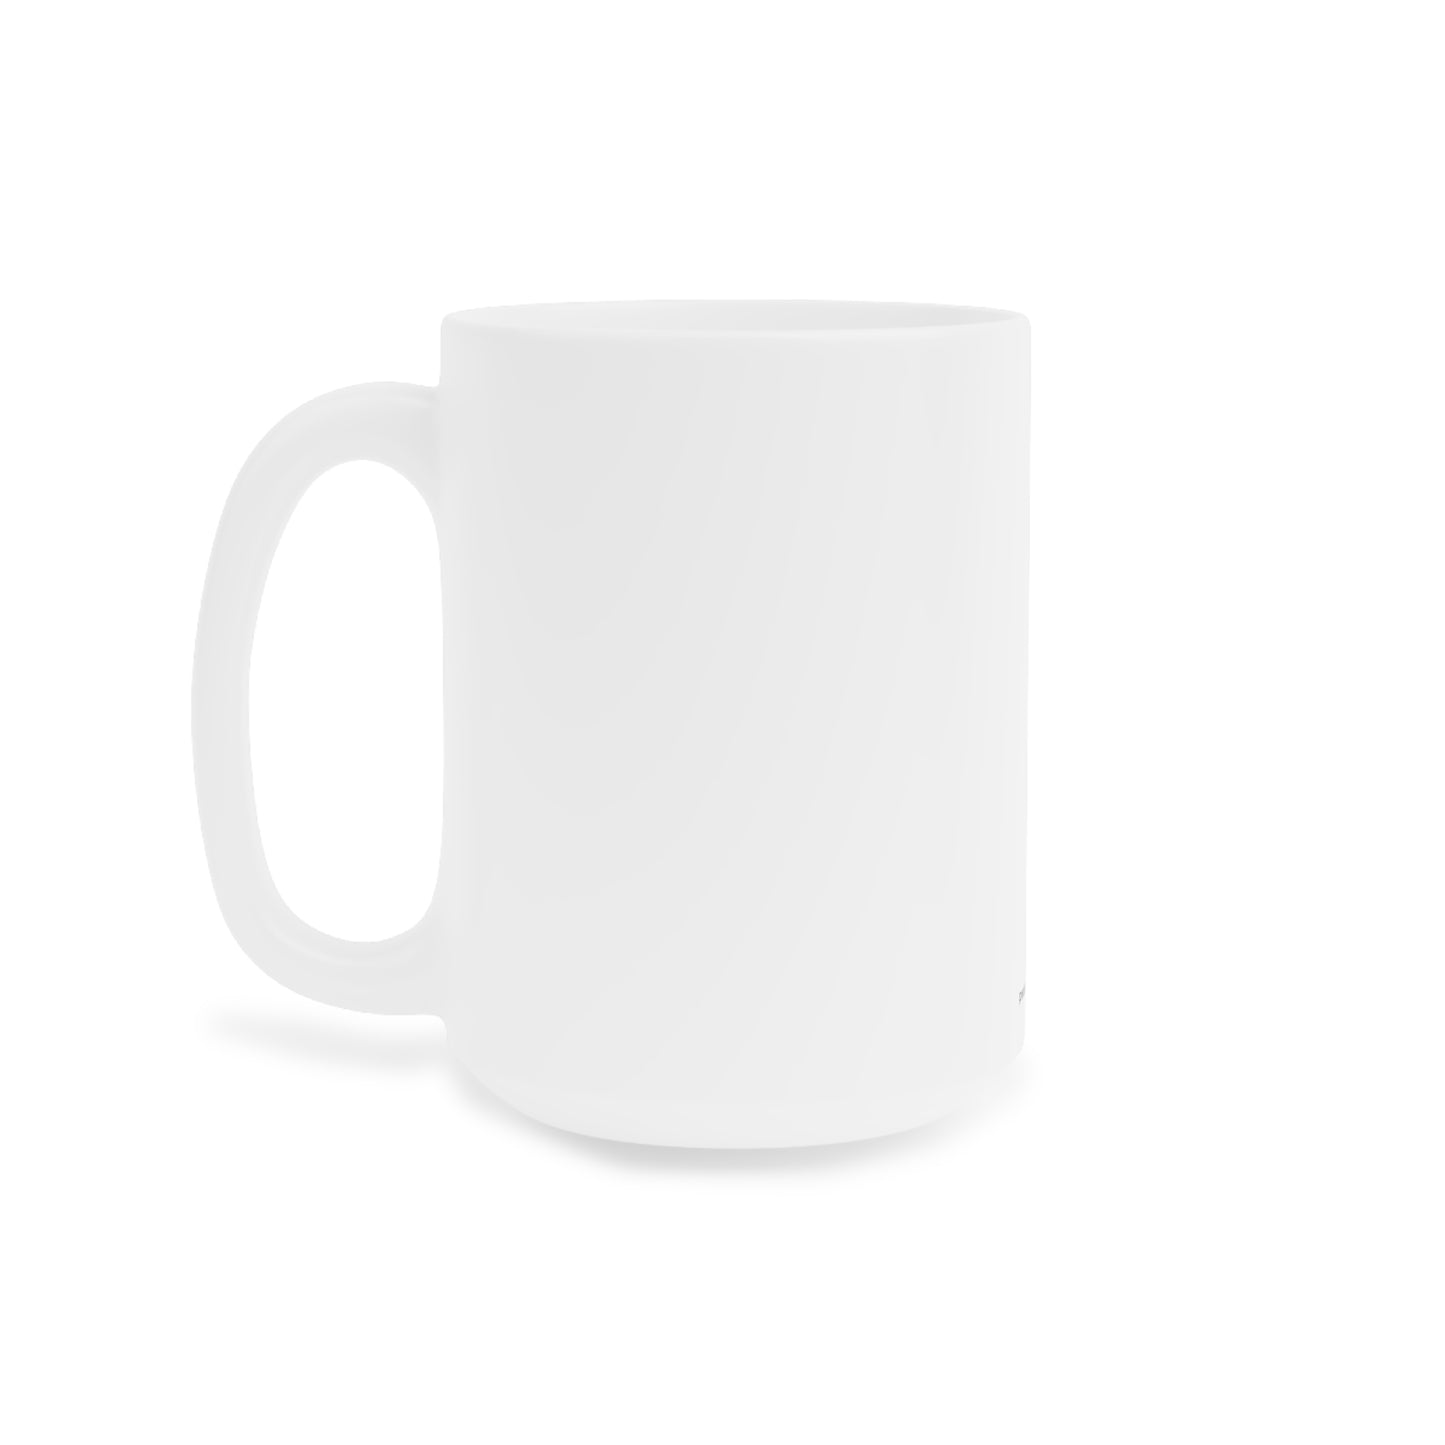 Coffee Mug 15oz - (110) Darmstadtium Ds